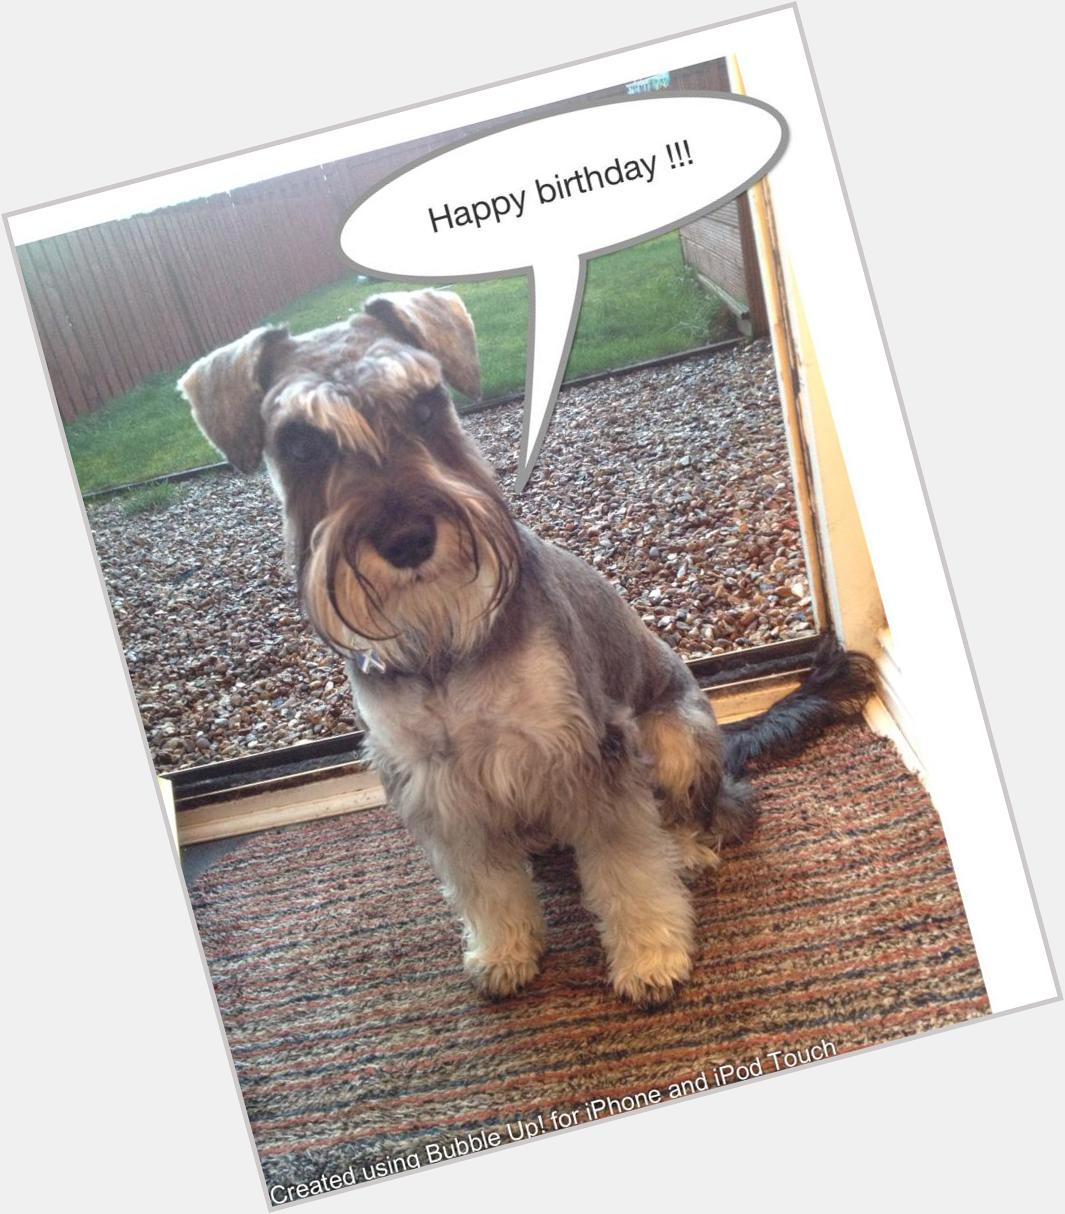 Happy 50th Birthday ya auld dog you! Have a good one 